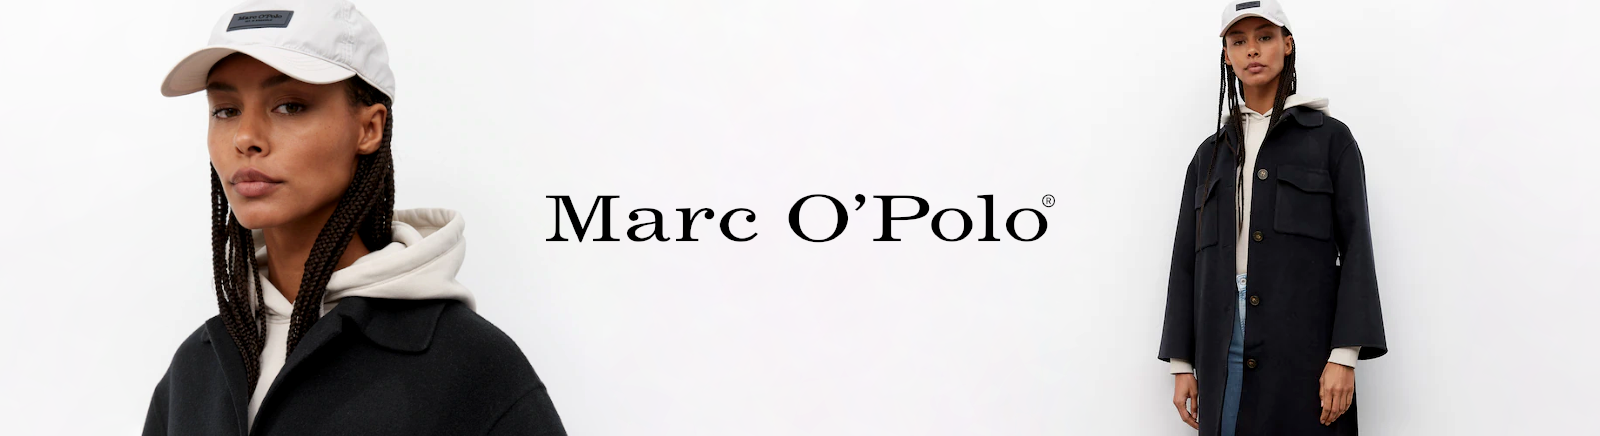 Juppen: Marc O'Polo Schnürschuhe für Damen online shoppen